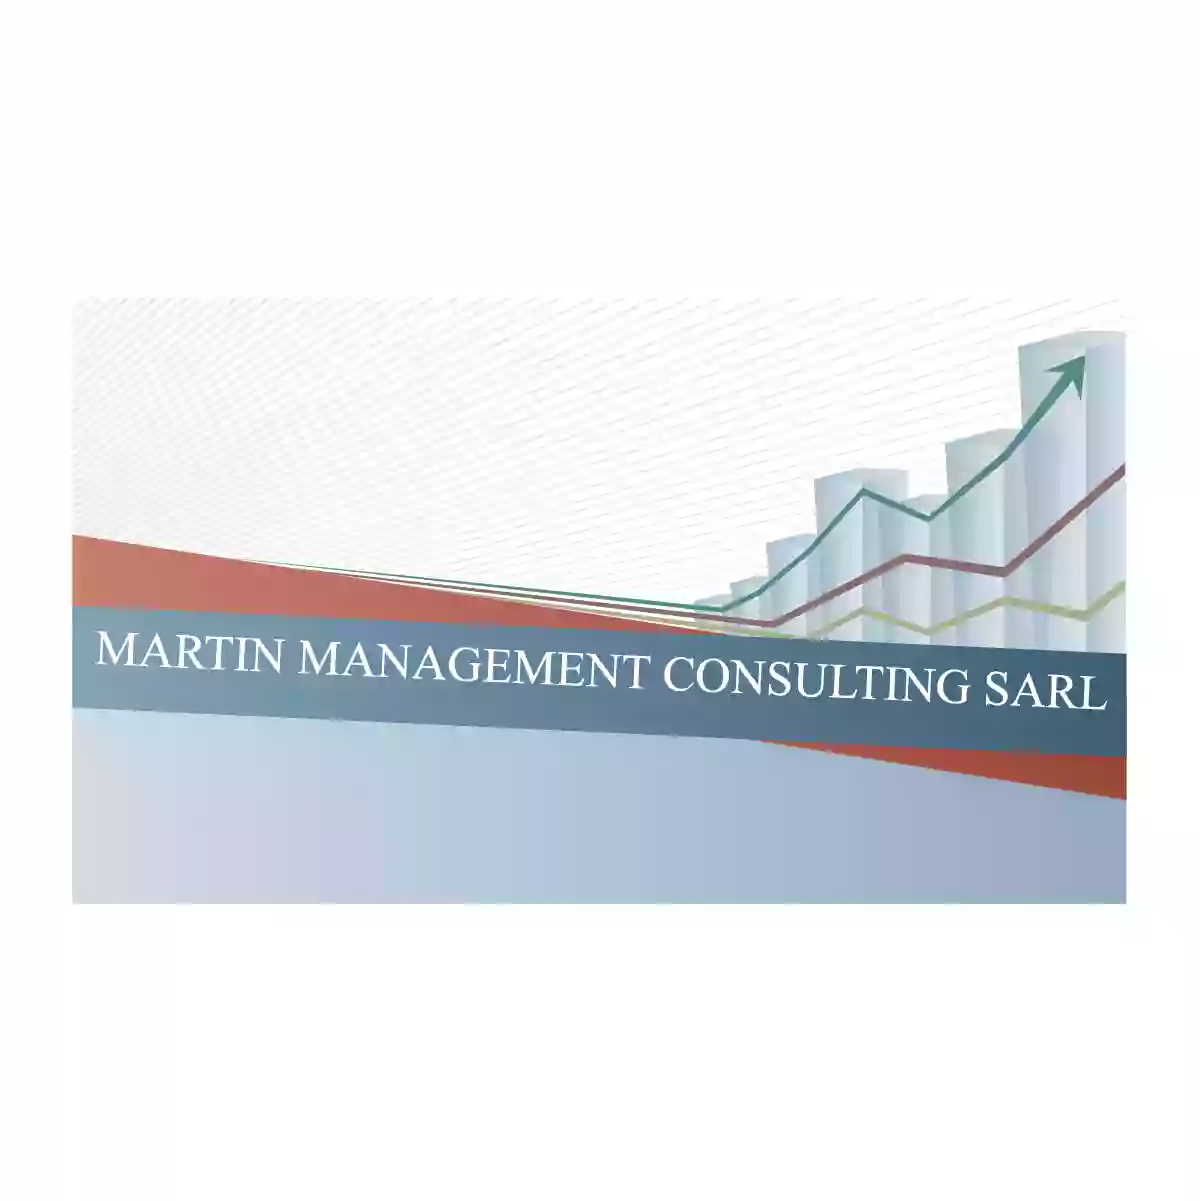 Martin Management Consulting